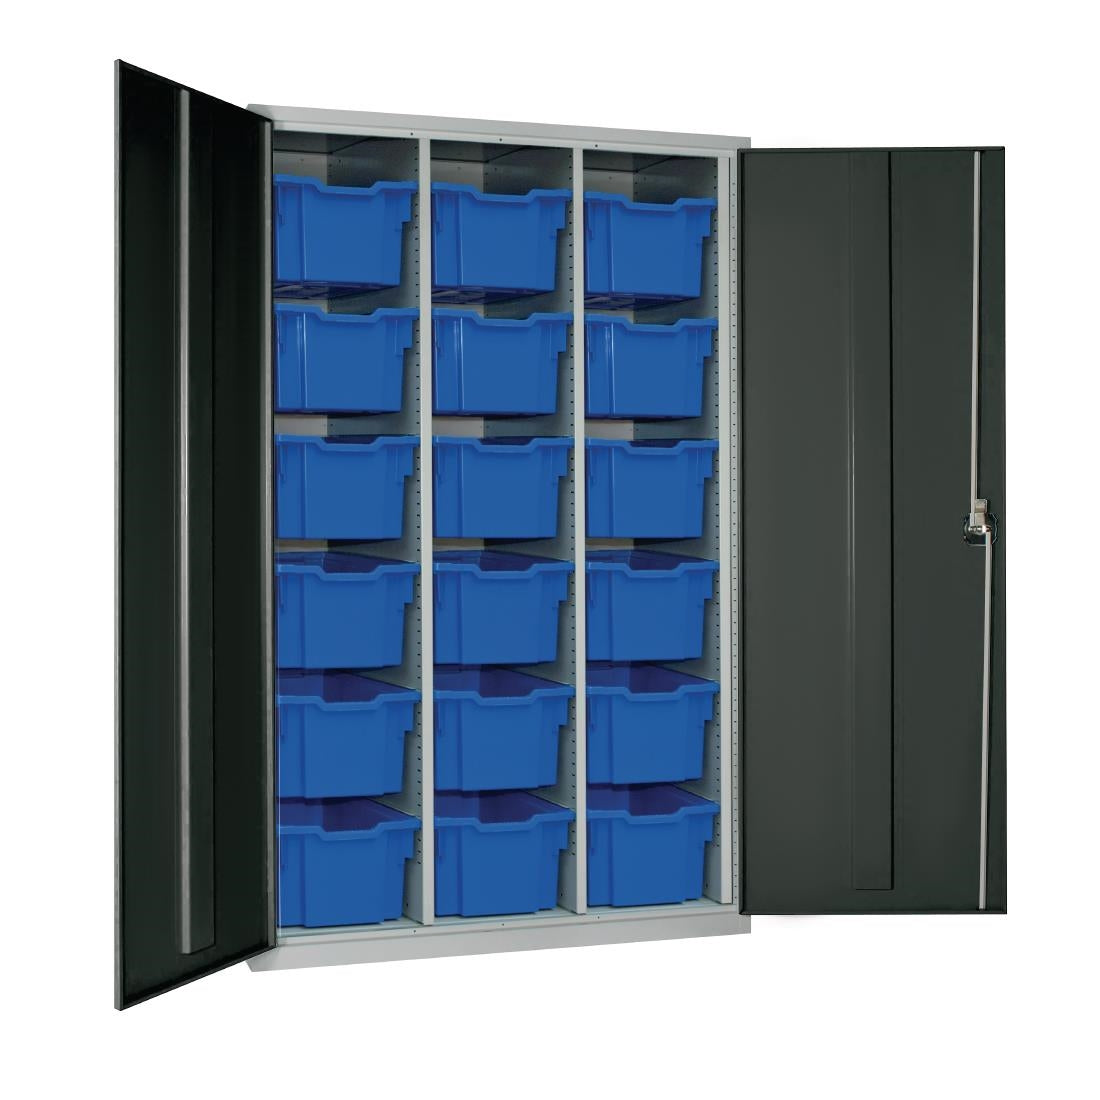 18 Tray High-Capacity Storage Cupboard - Dark Grey with Blue Trays